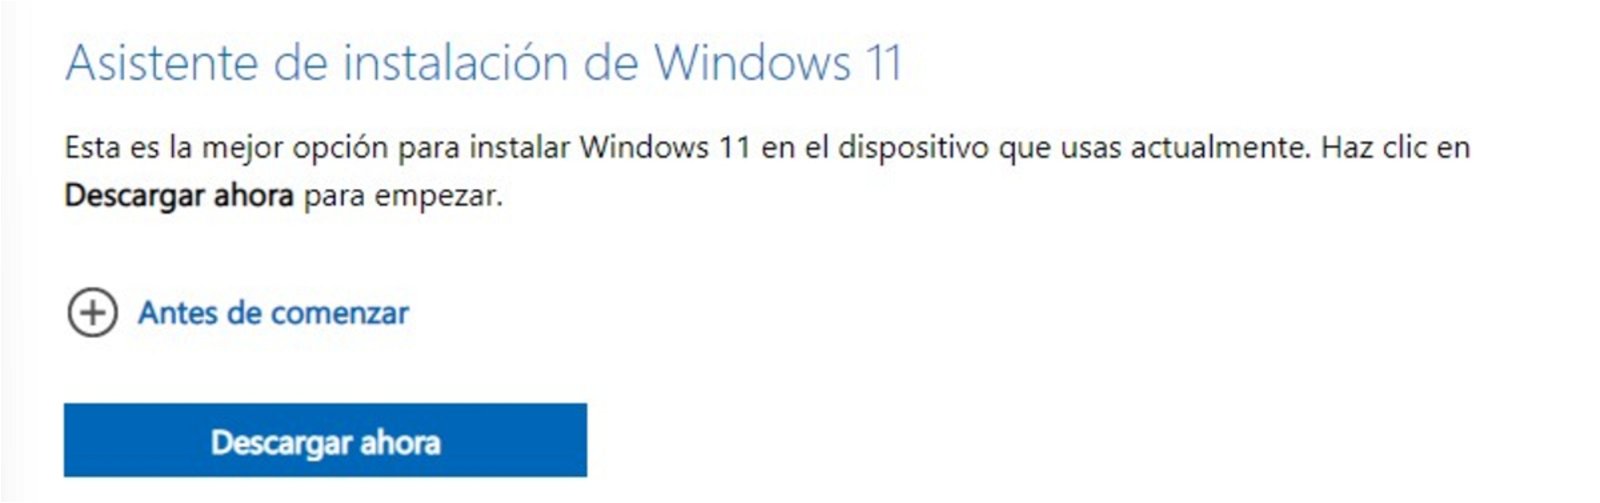 Cómo actualizar a Windows 11 desde Windows 10 paso a paso